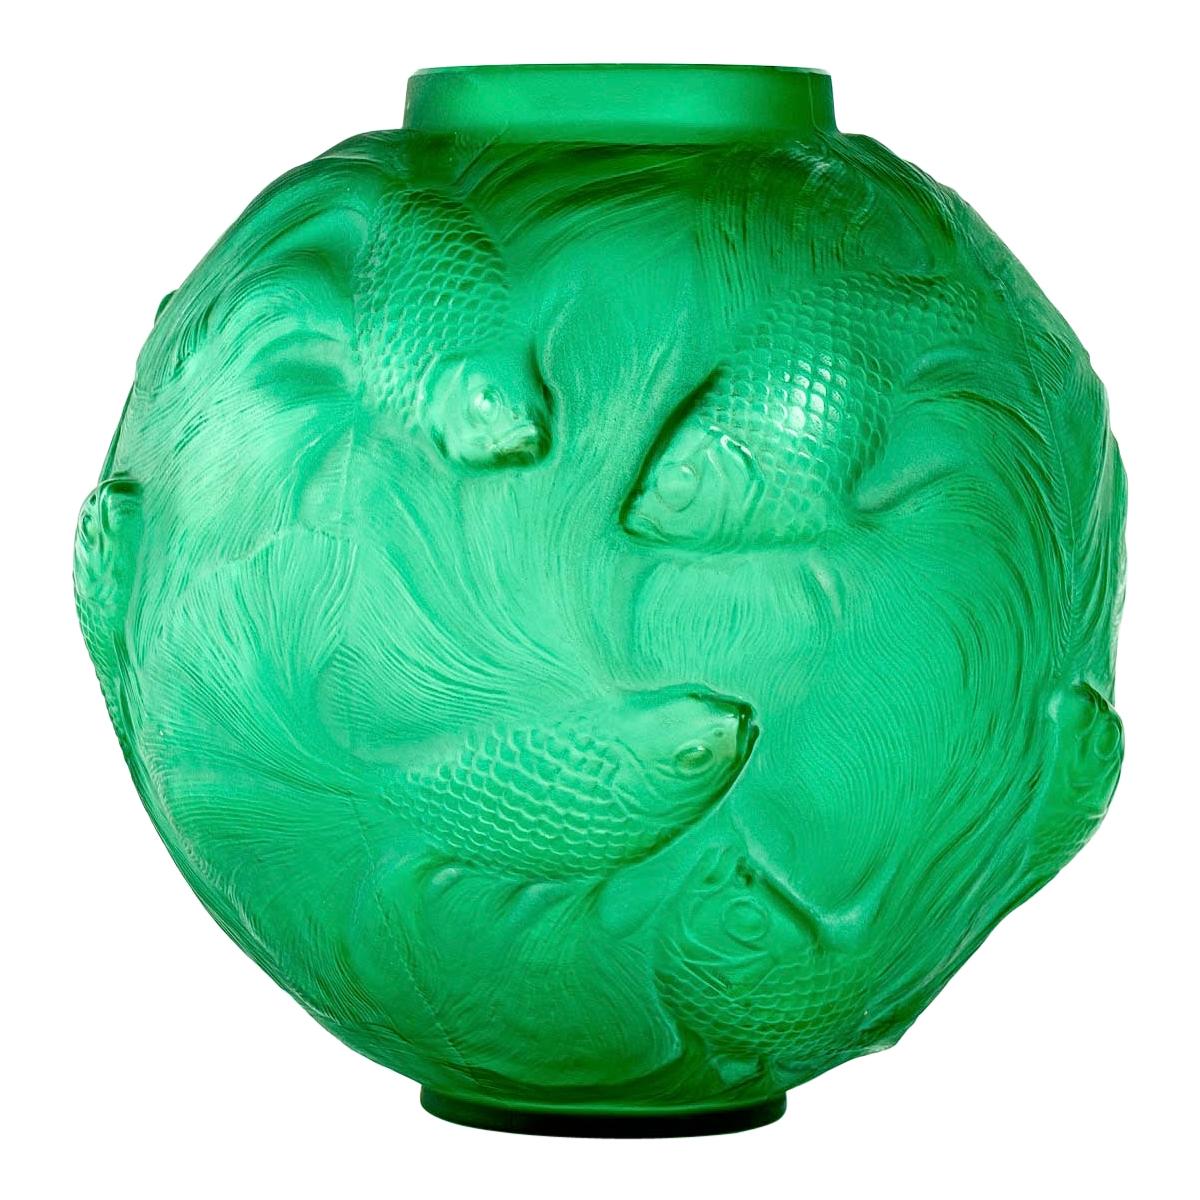 1924 René Lalique Formose Vase in Emerald Green Glass